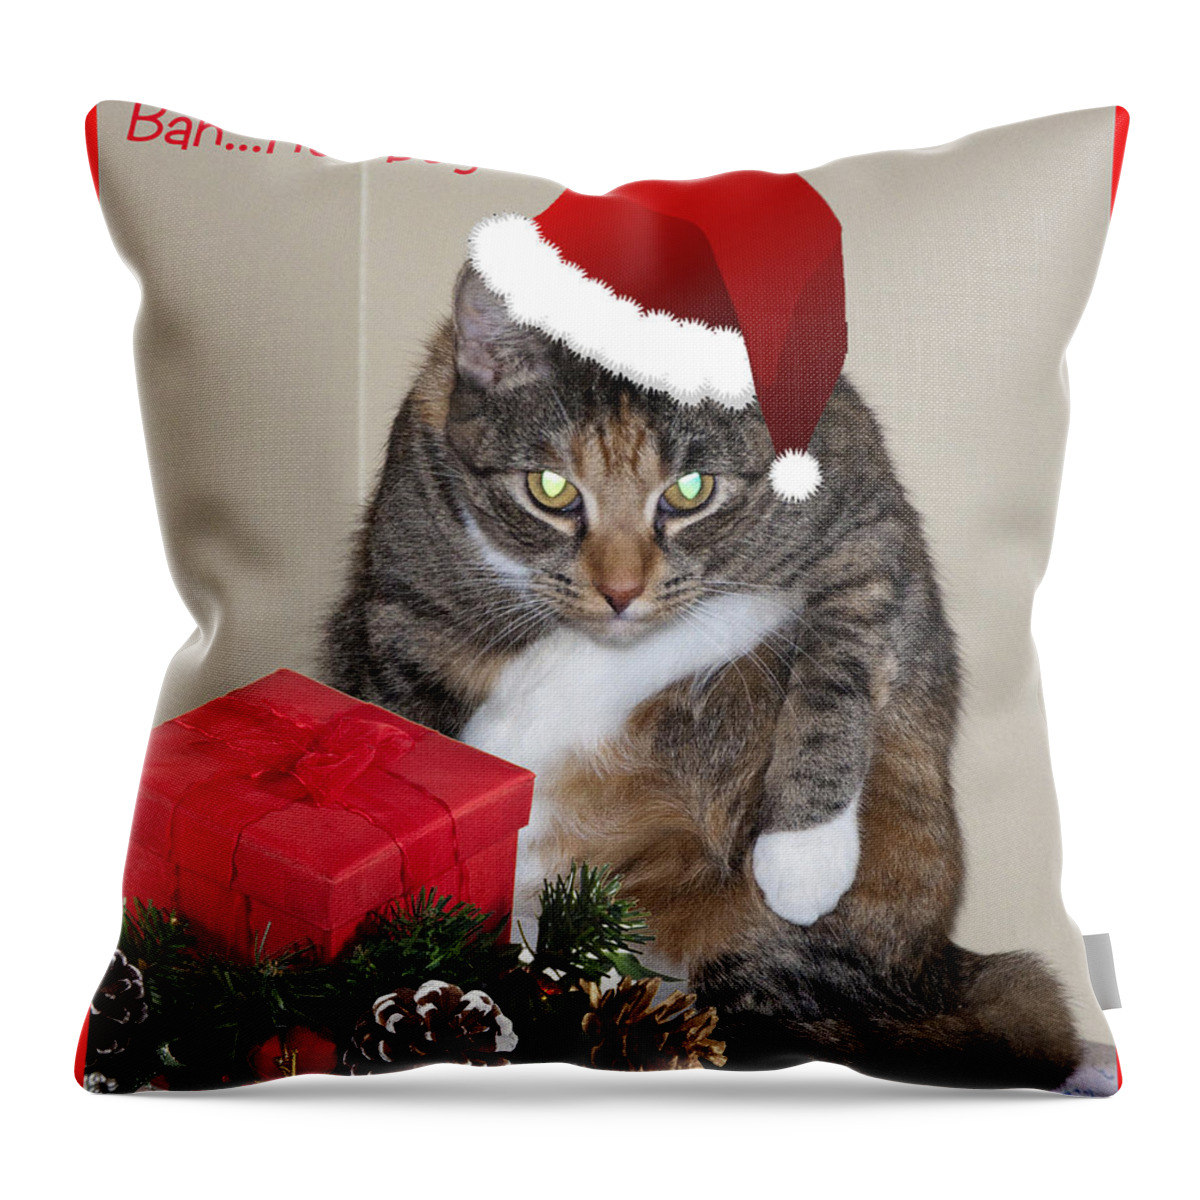 Cat Throw Pillow featuring the photograph Humbug by Cathy Kovarik